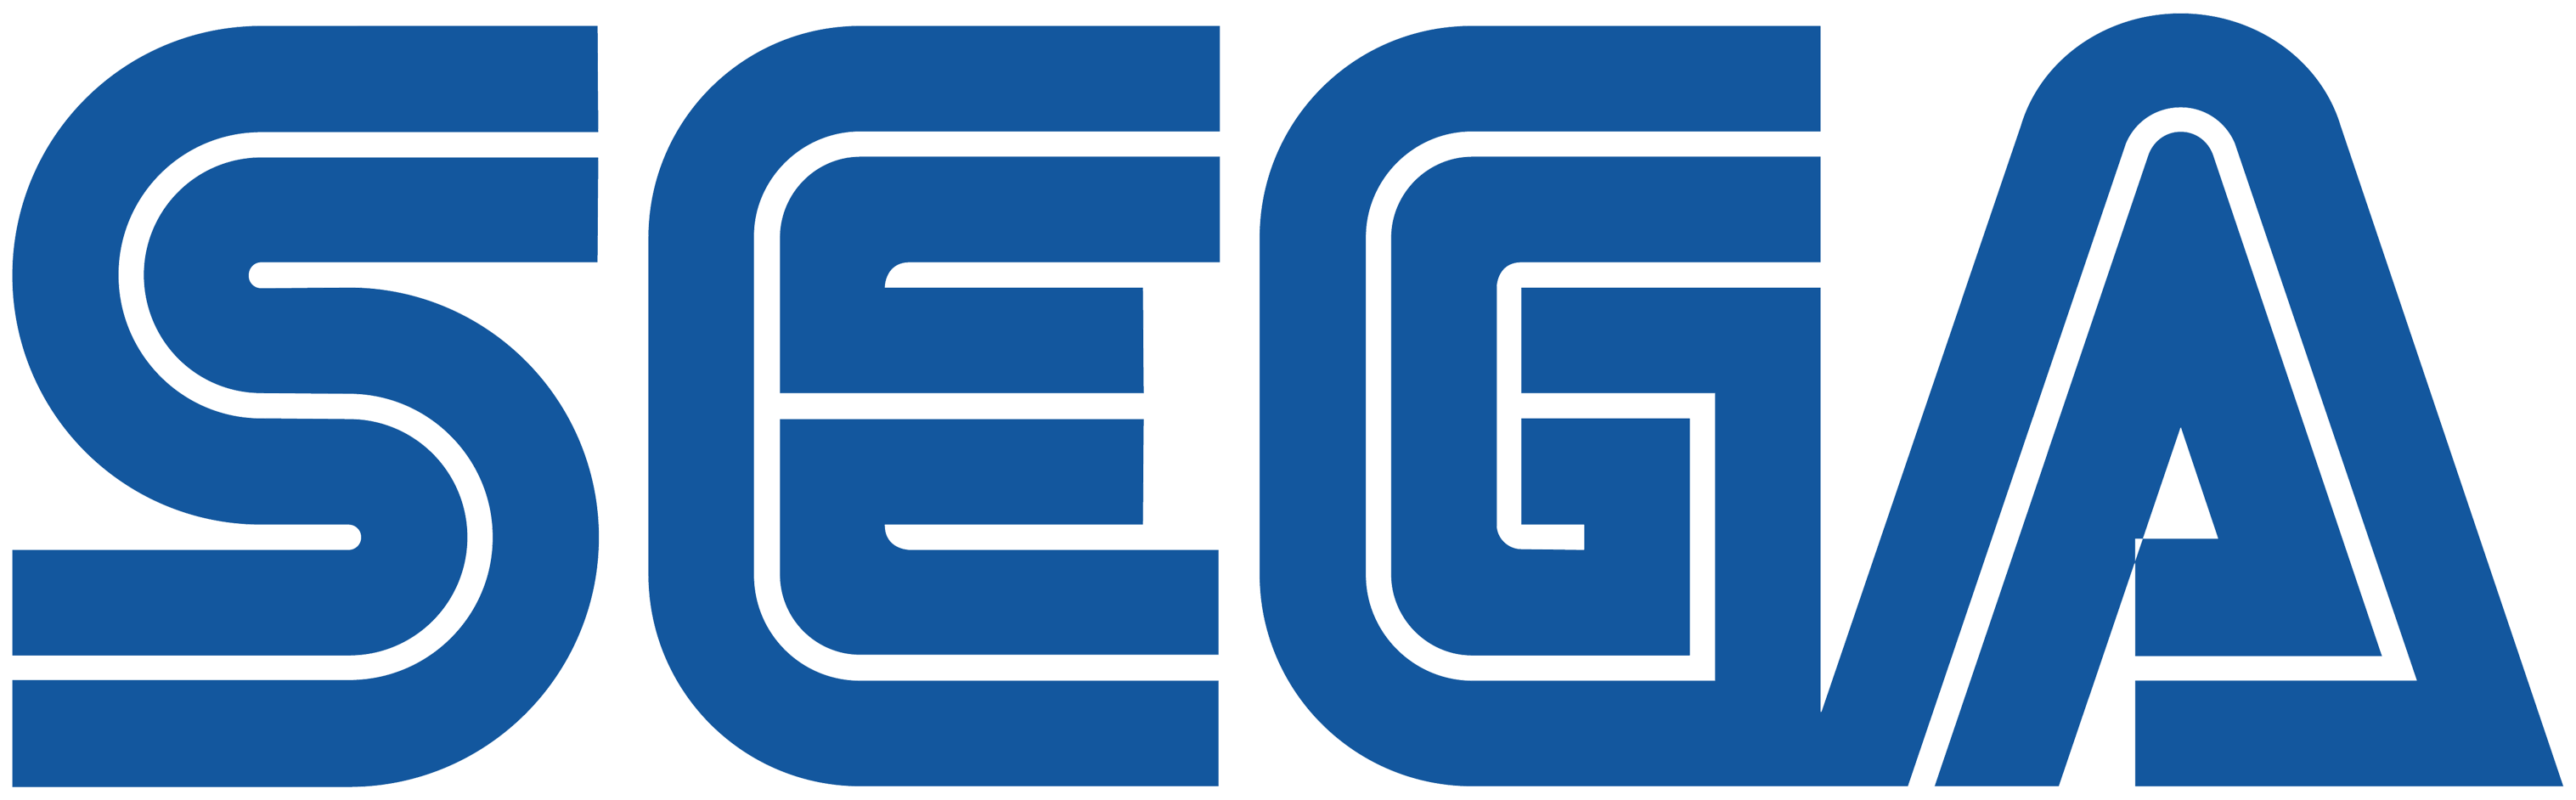 Sega Enterprises